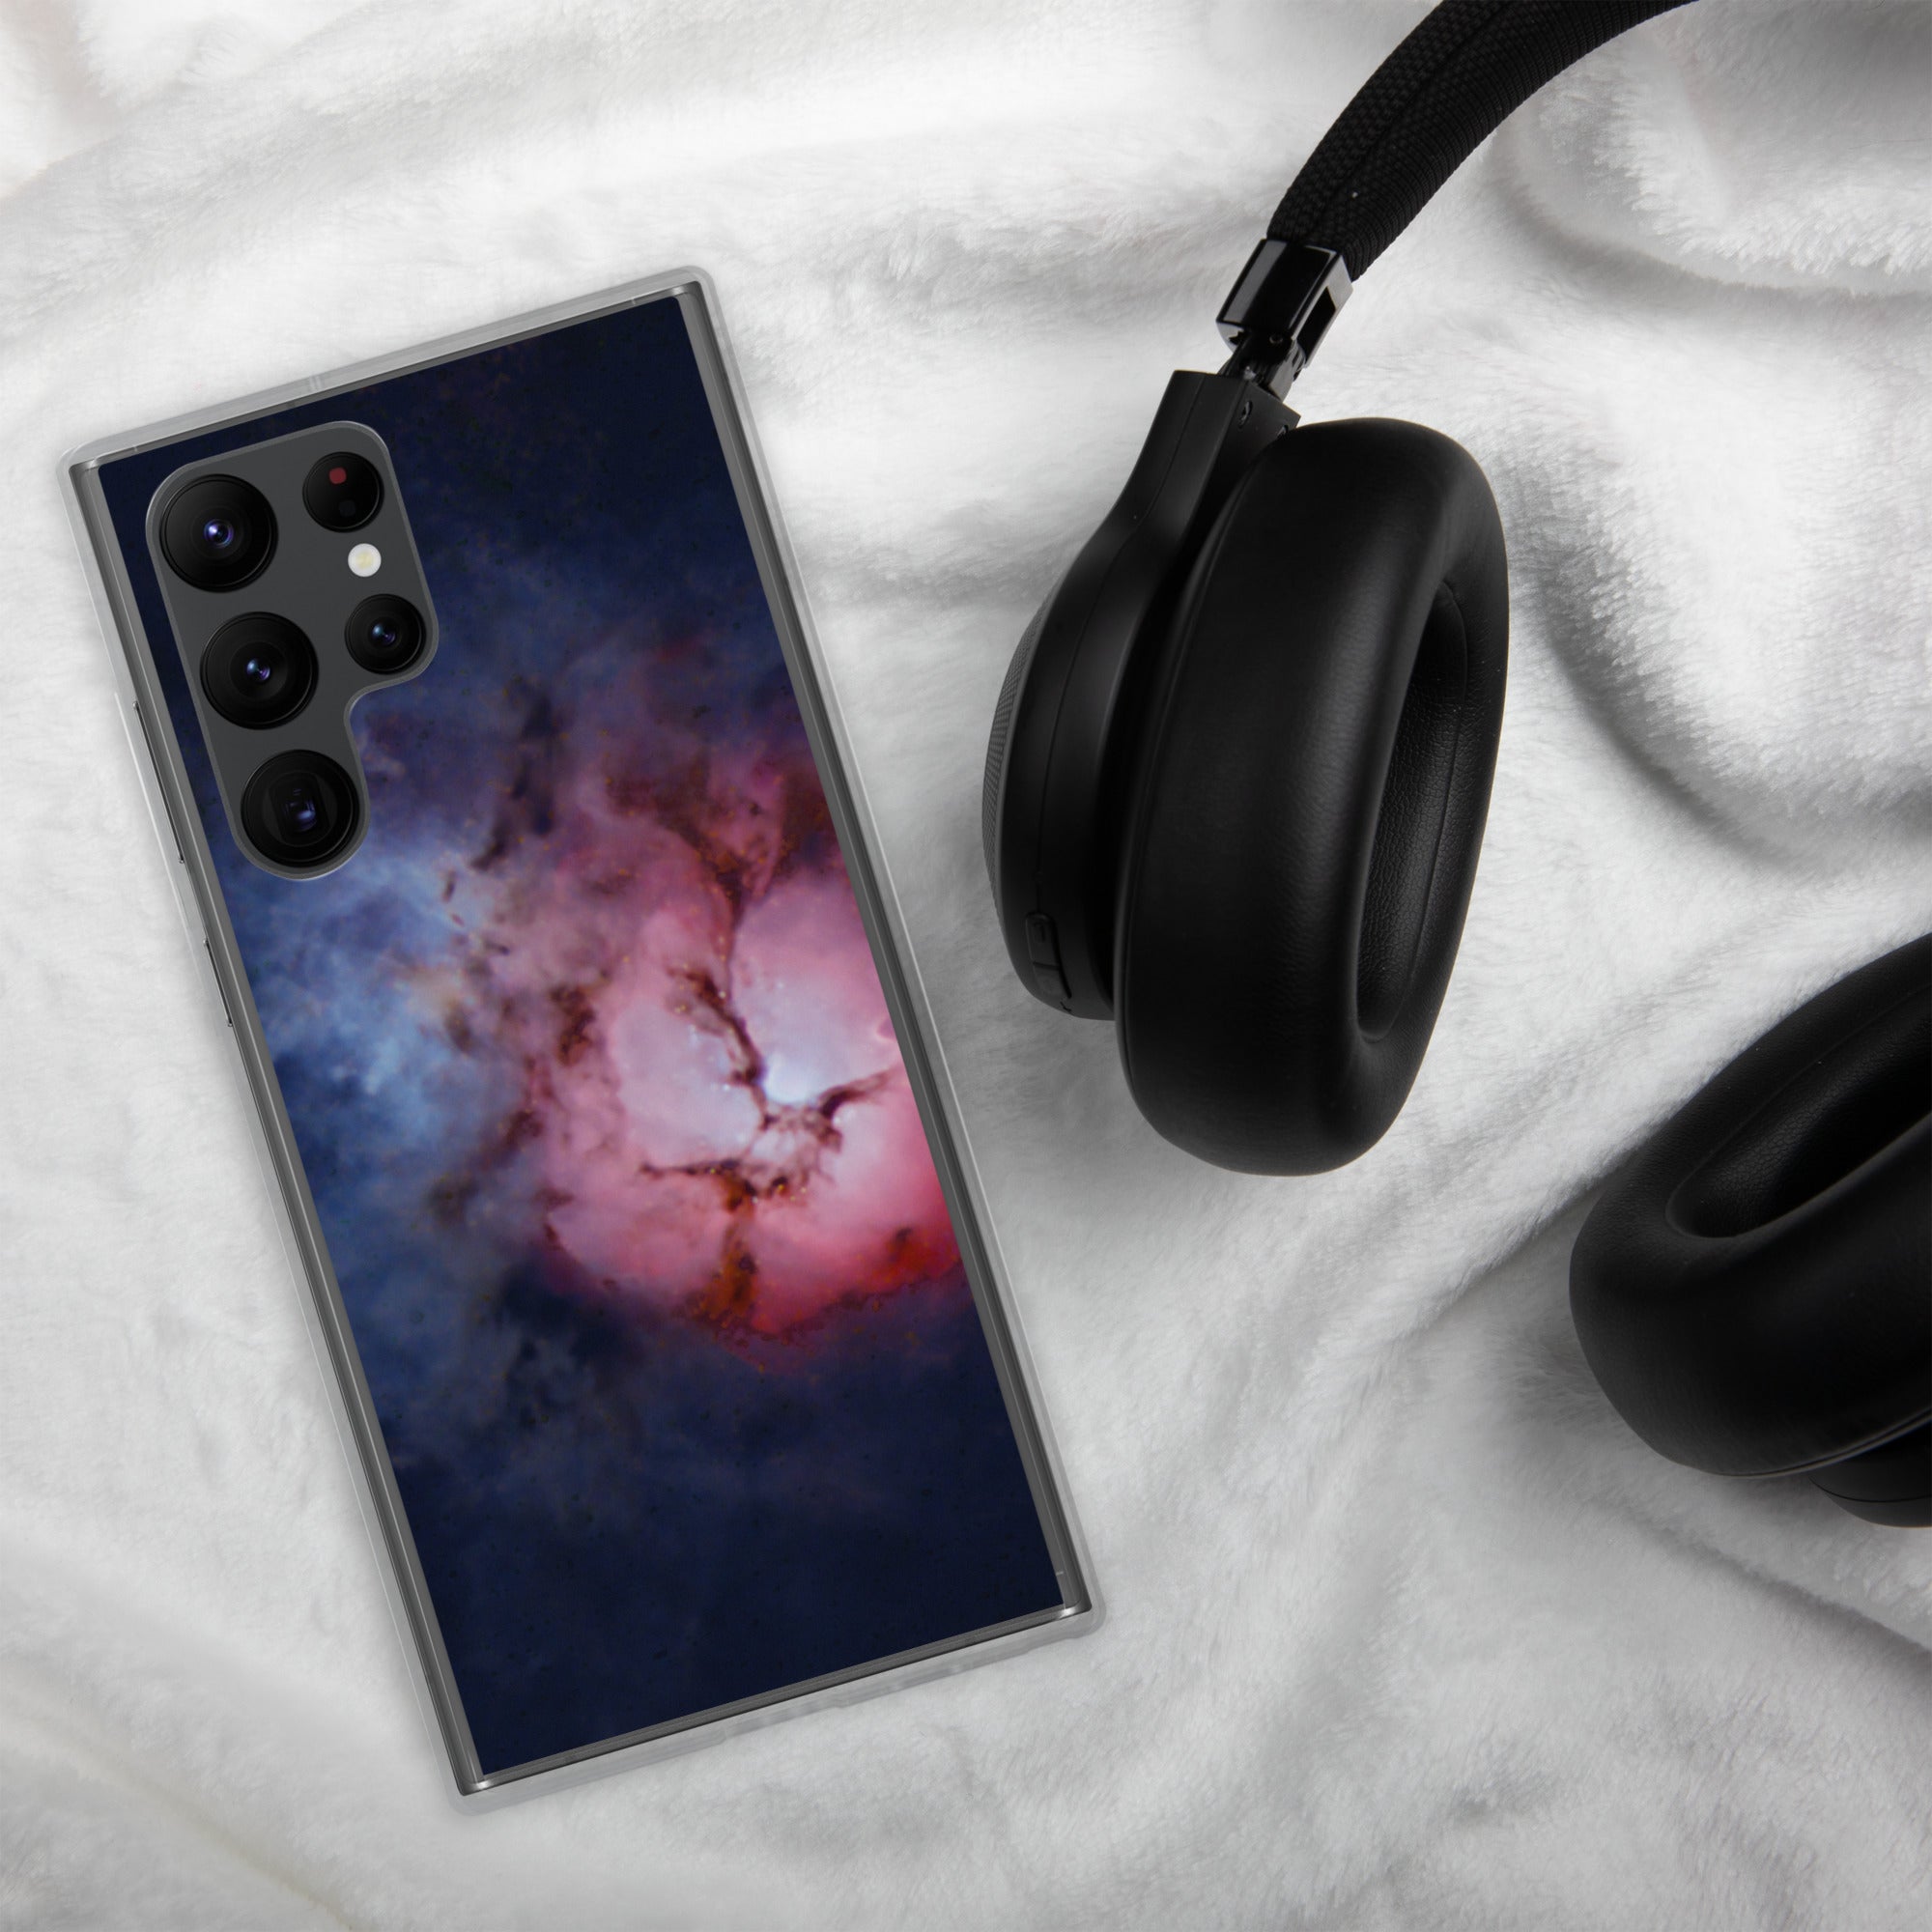 Samsung Phone Case: Trifid Nebula